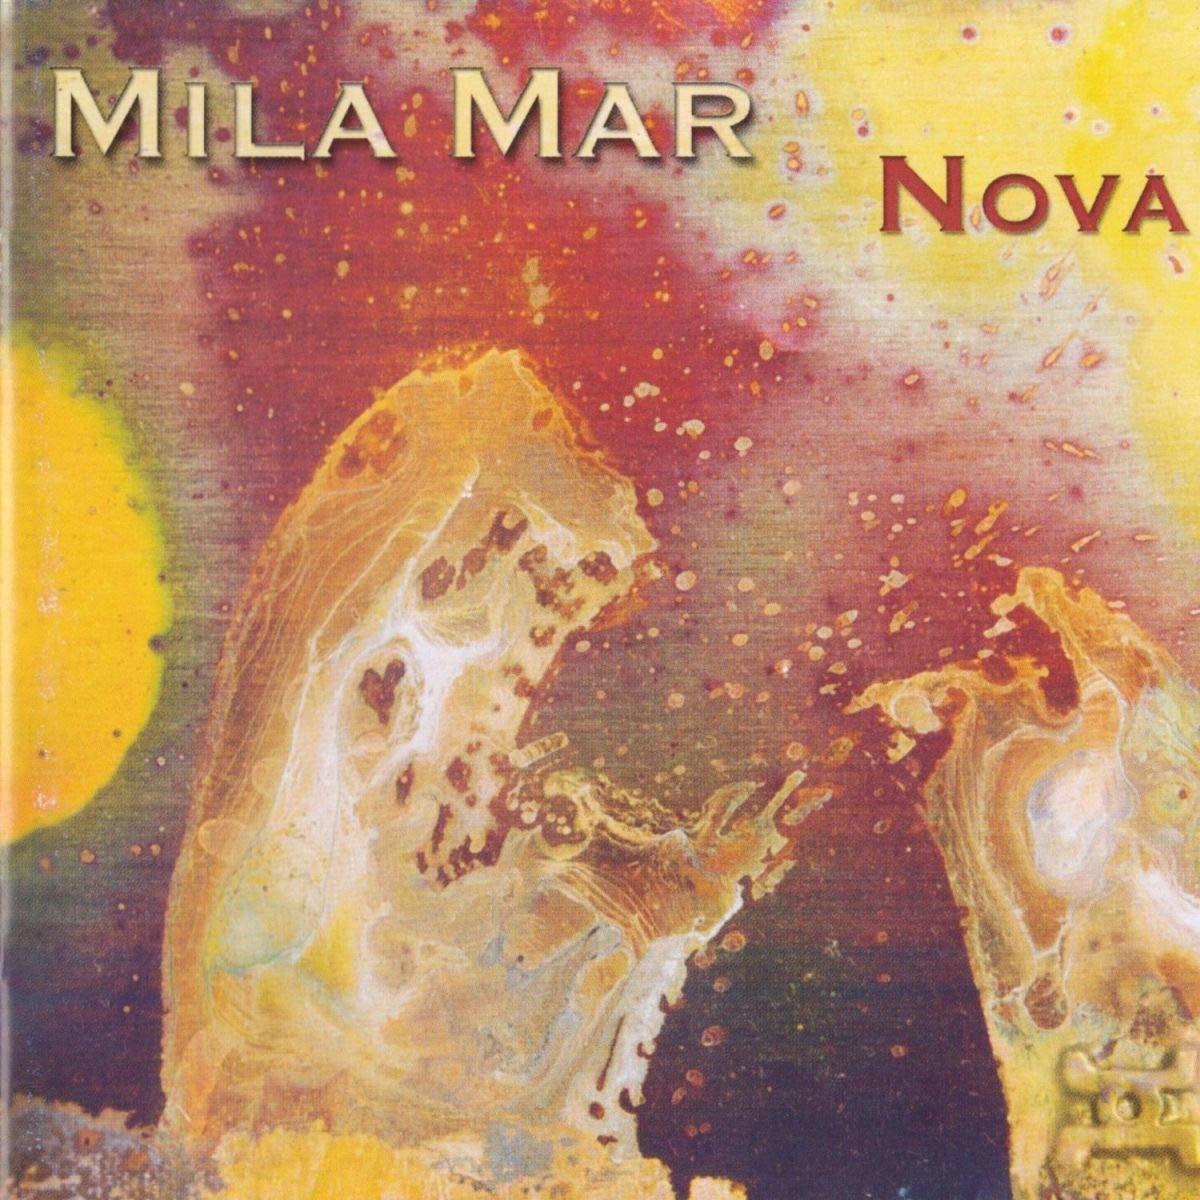 Mila Mar - (CD) Nova 